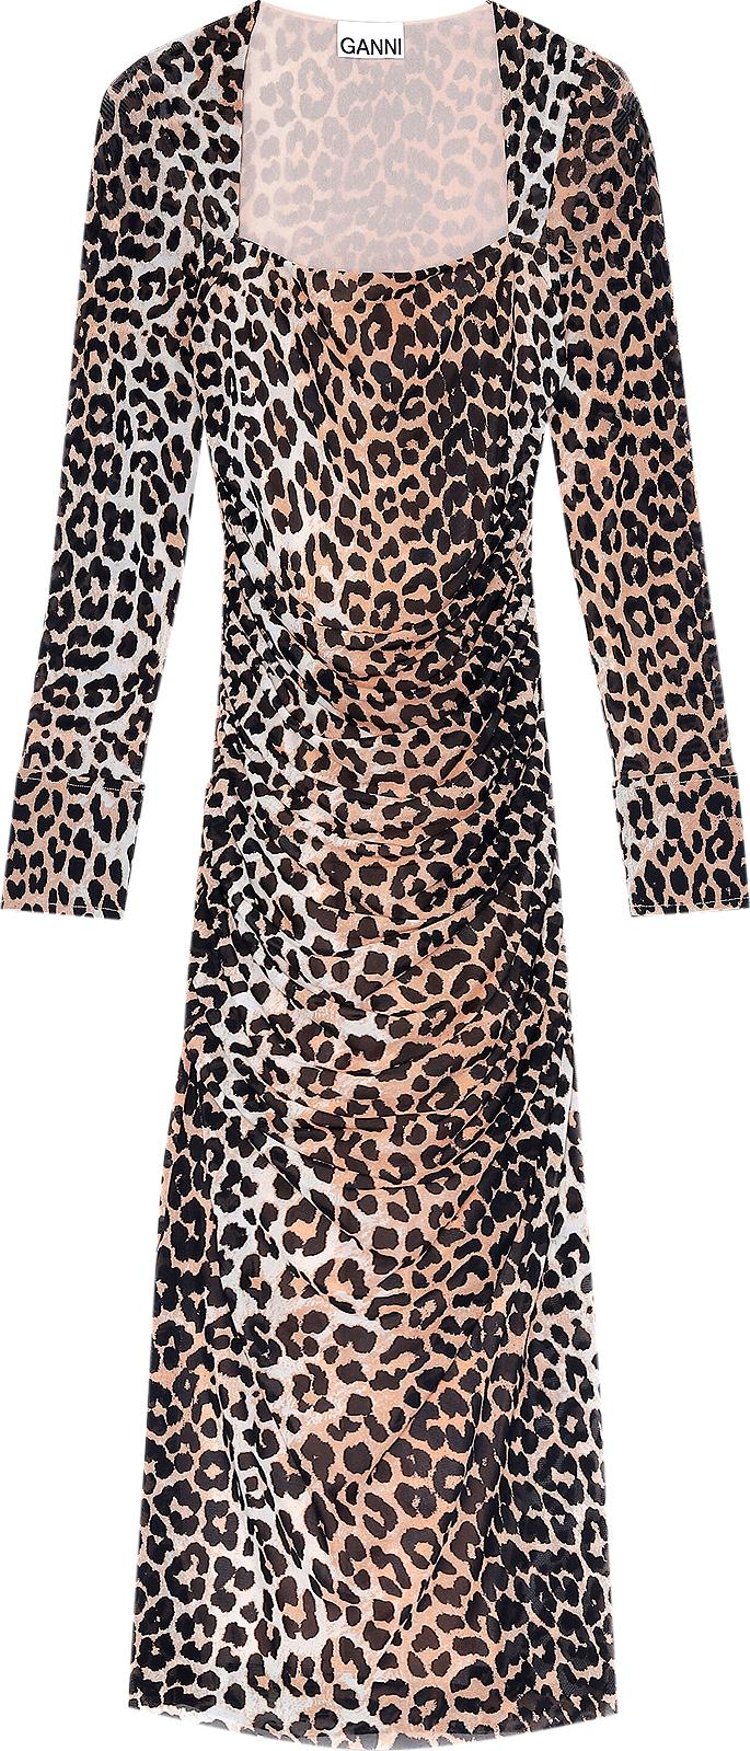 GANNI Printed Mesh Dress 'Leopard'